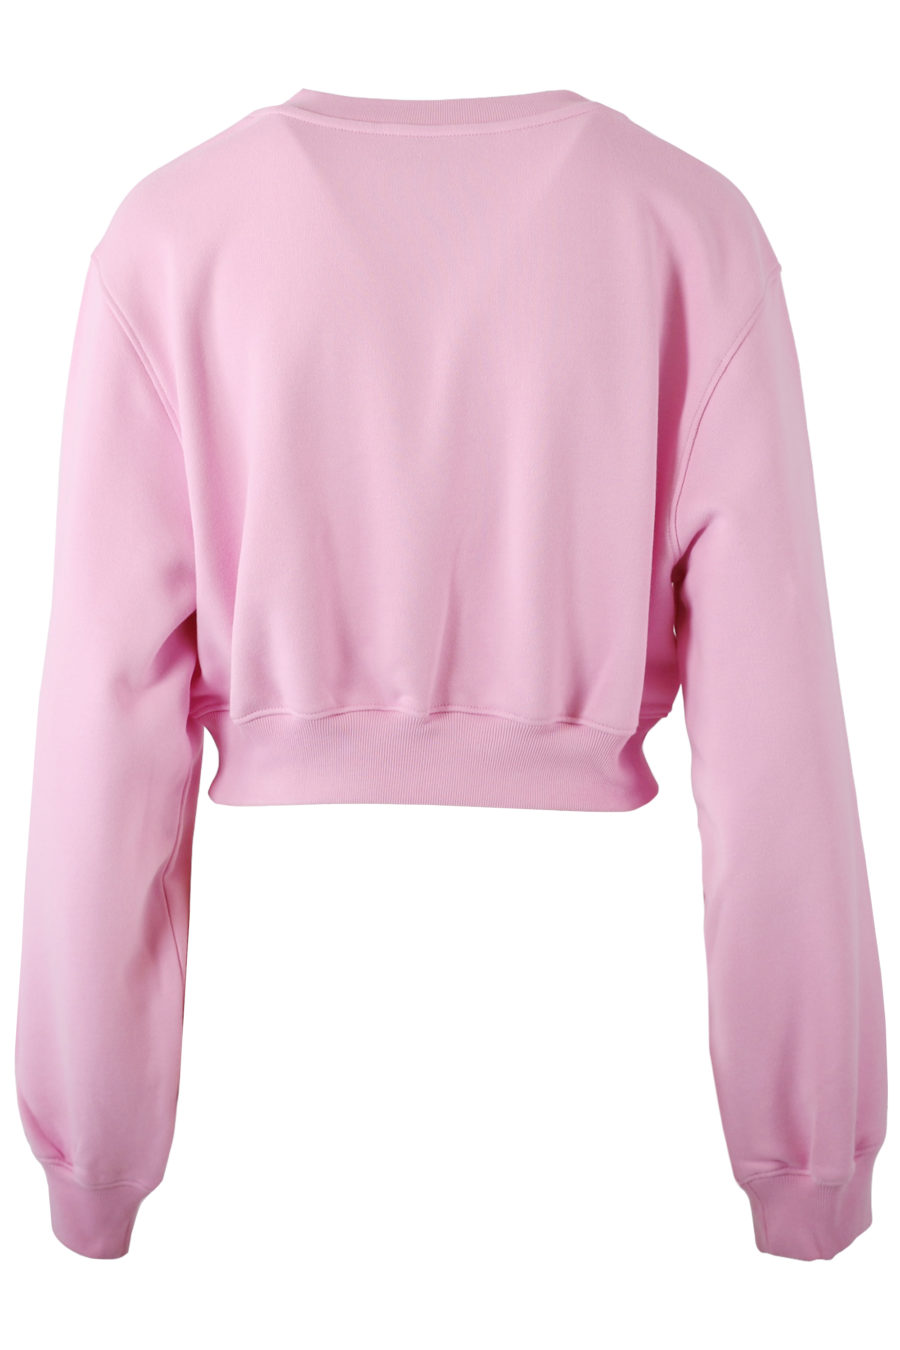 Pink sweatshirt with shiny logo - IMG 7169 copy